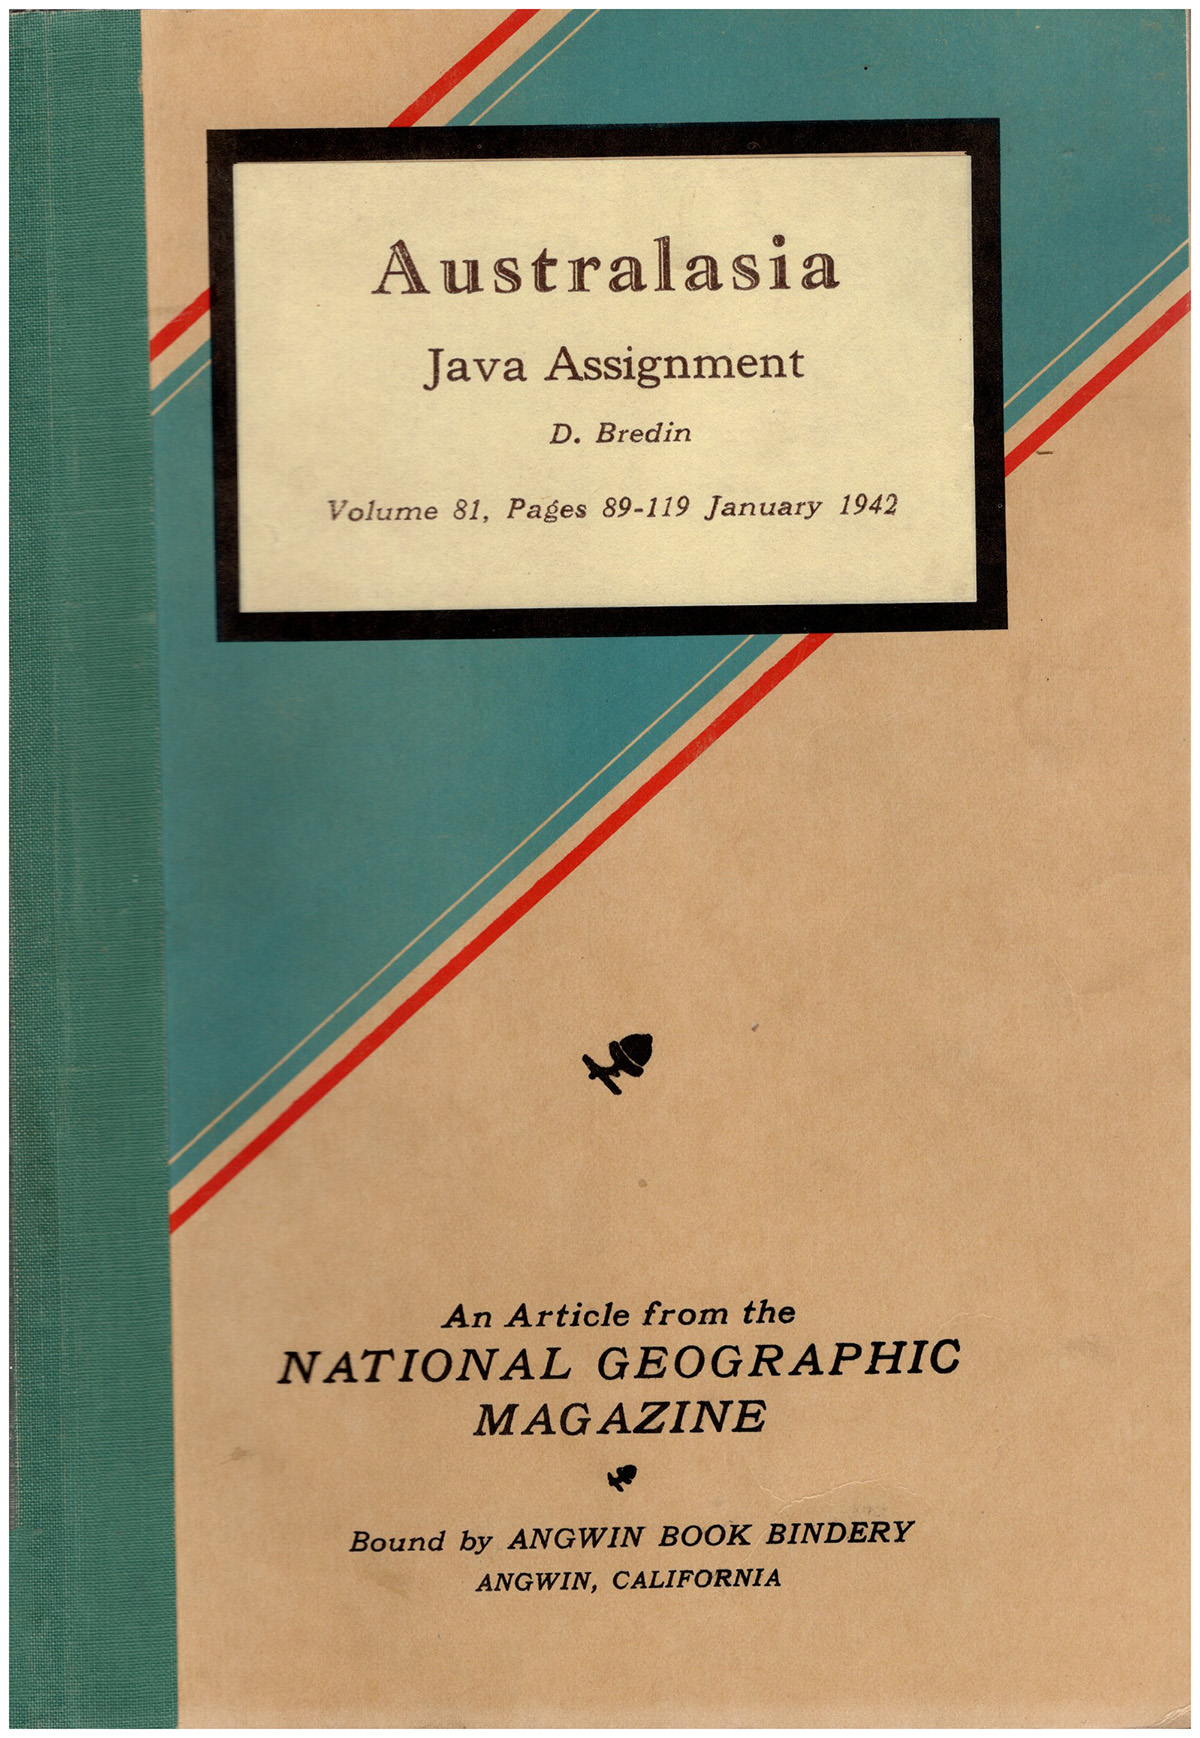 Bredin, Dee - Australasia: Java Assignment (National Geographic, Vol 81, January 1942)